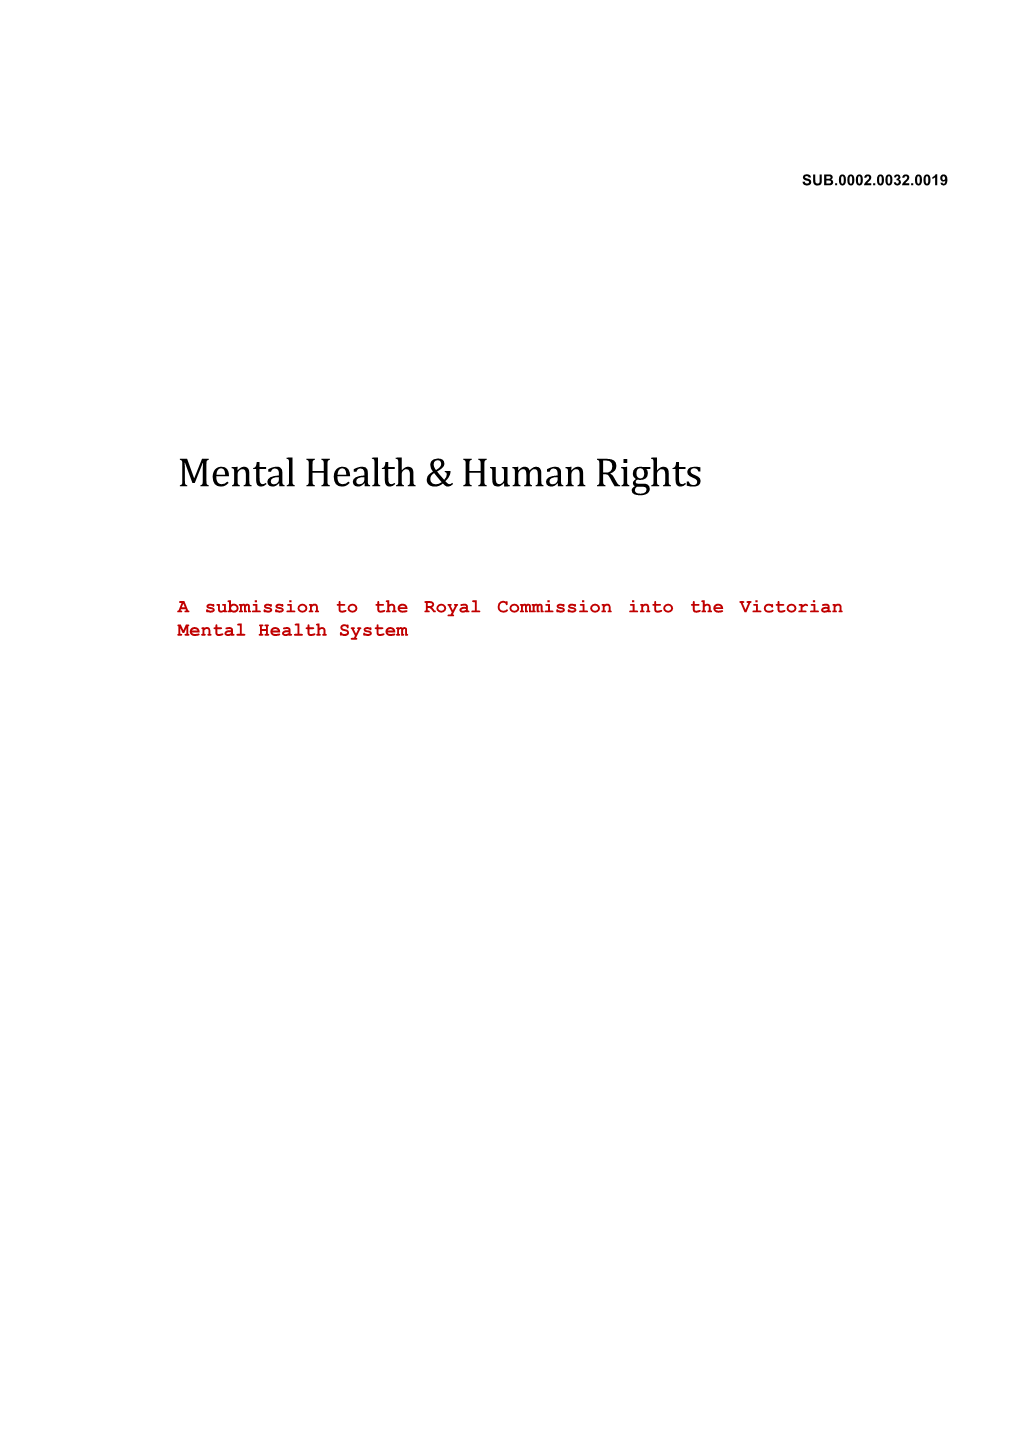 Mental Health & Human Rights